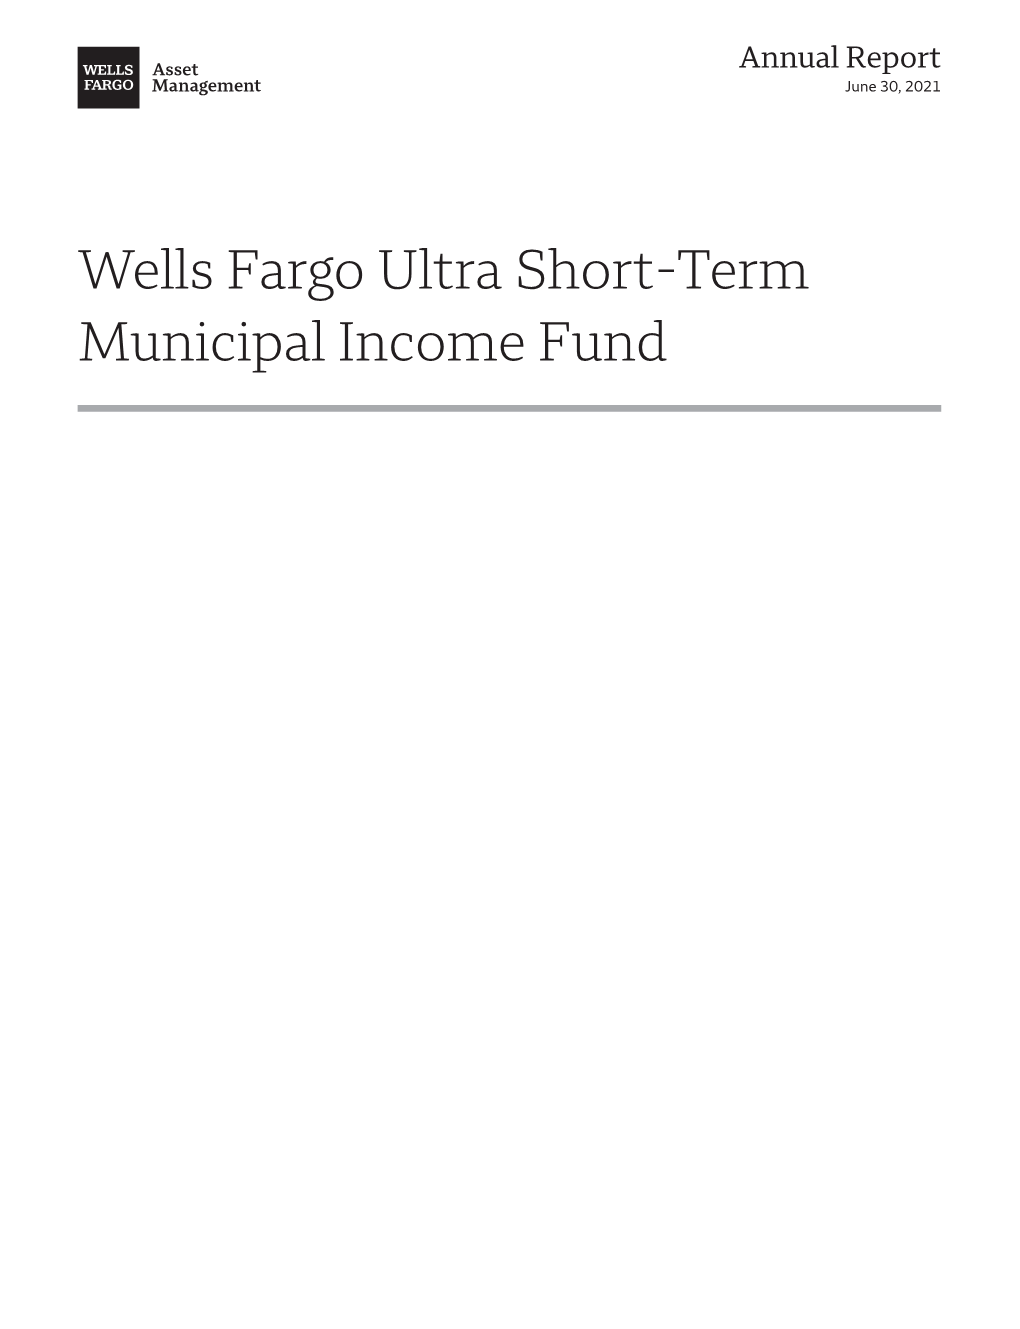 Wells Fargo Ultra Short-Term Municipal Income Fund